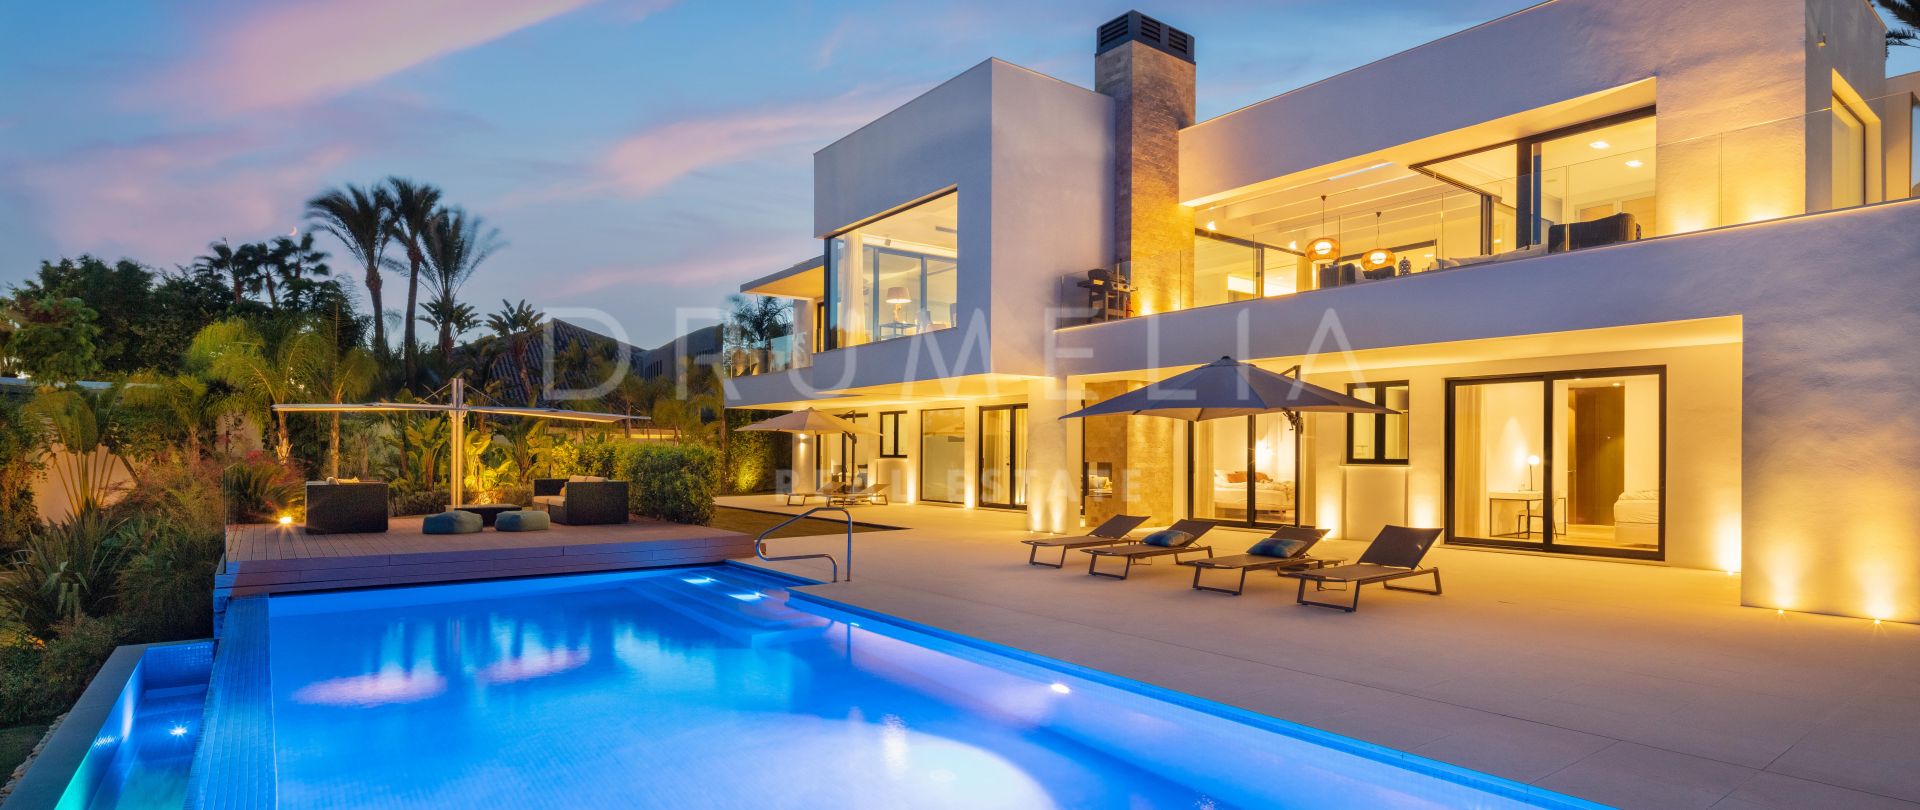 Cerquilla 31 - Schöne moderne Villa mit Panoramablick auf das Meer in La Cerquilla, Nueva Andalucia, Marbella